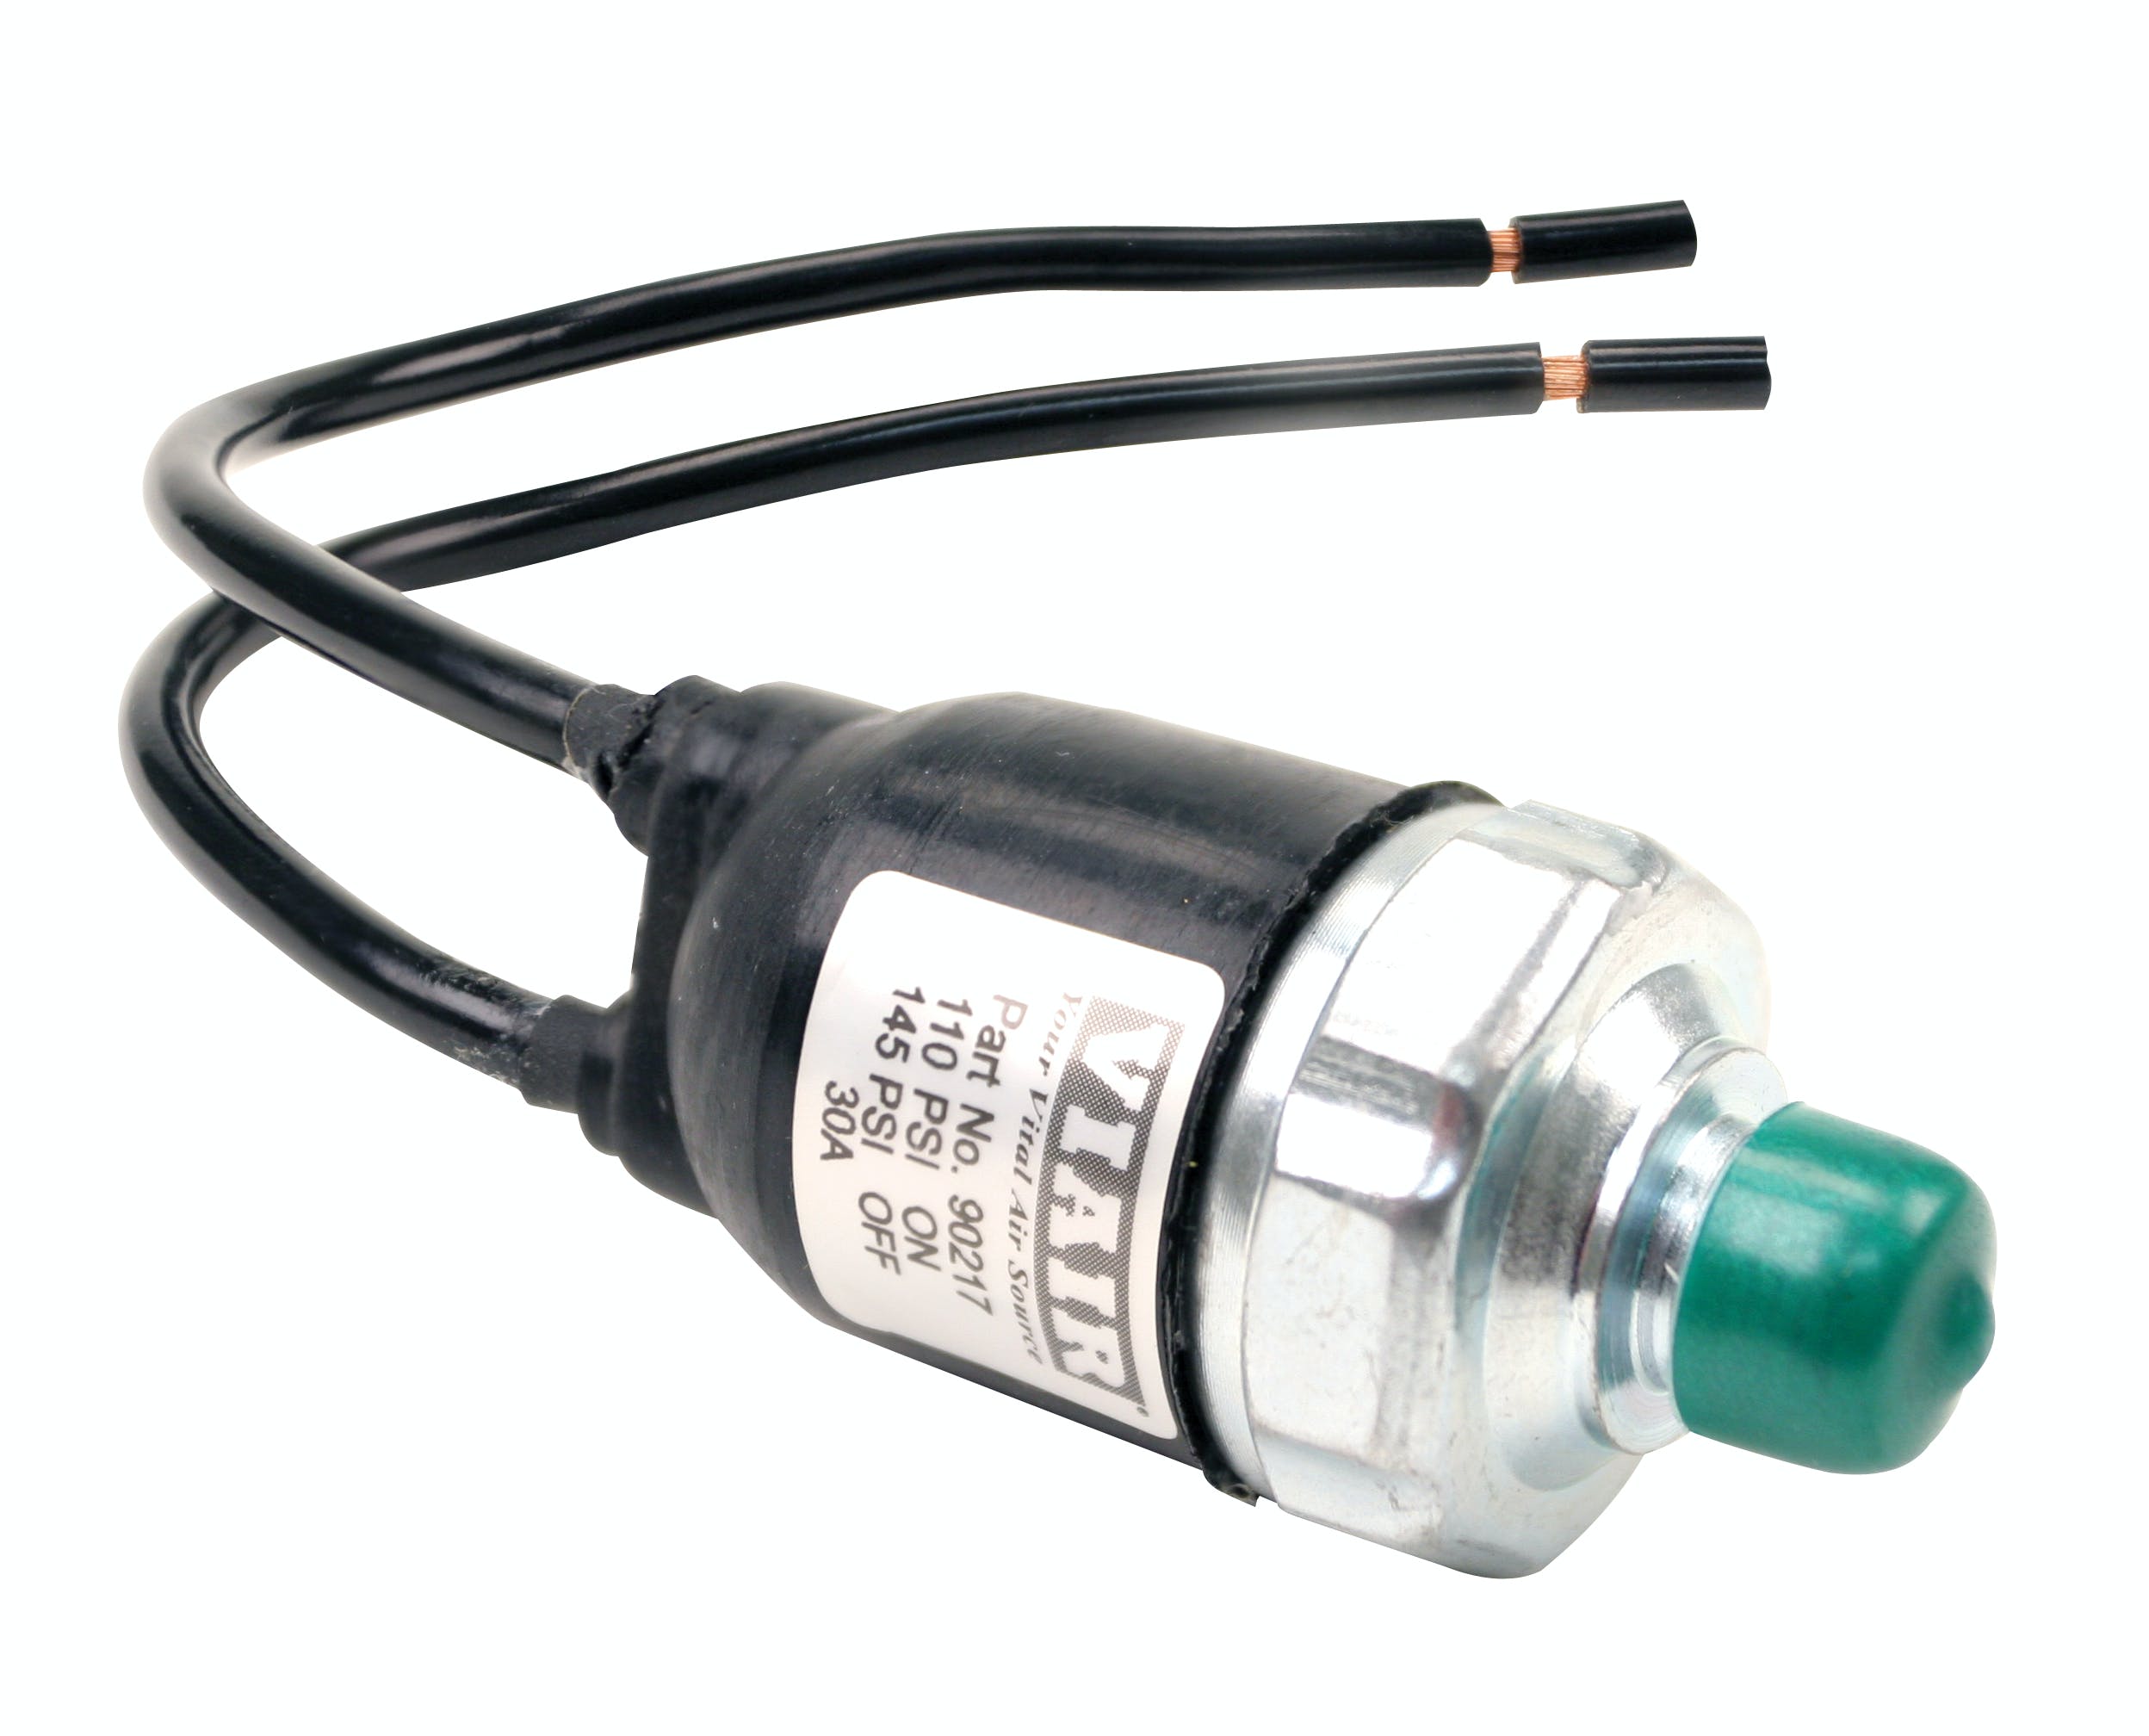 VIAIR 90221 Sealed Pressure Switch  1/8in M NPT Port  12 GA Lead Wires  165 psi On  200